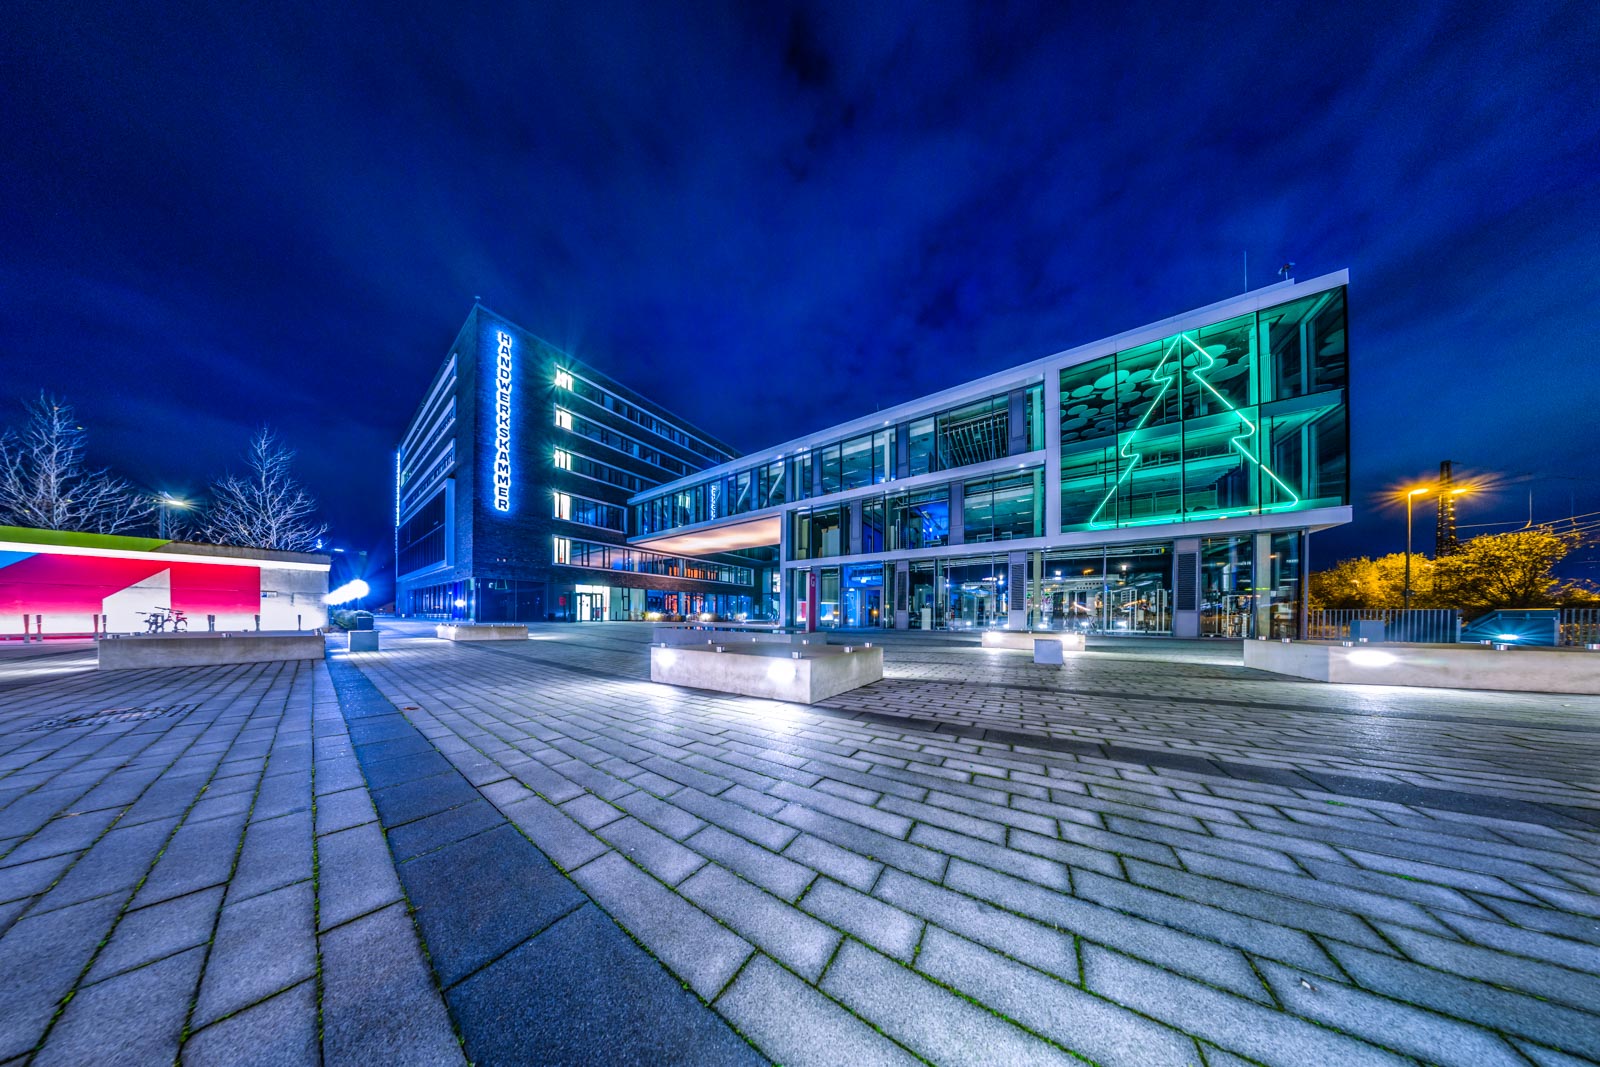 December night at the 'Campus Handwerk' in 2021 (Bielefeld, Germany).